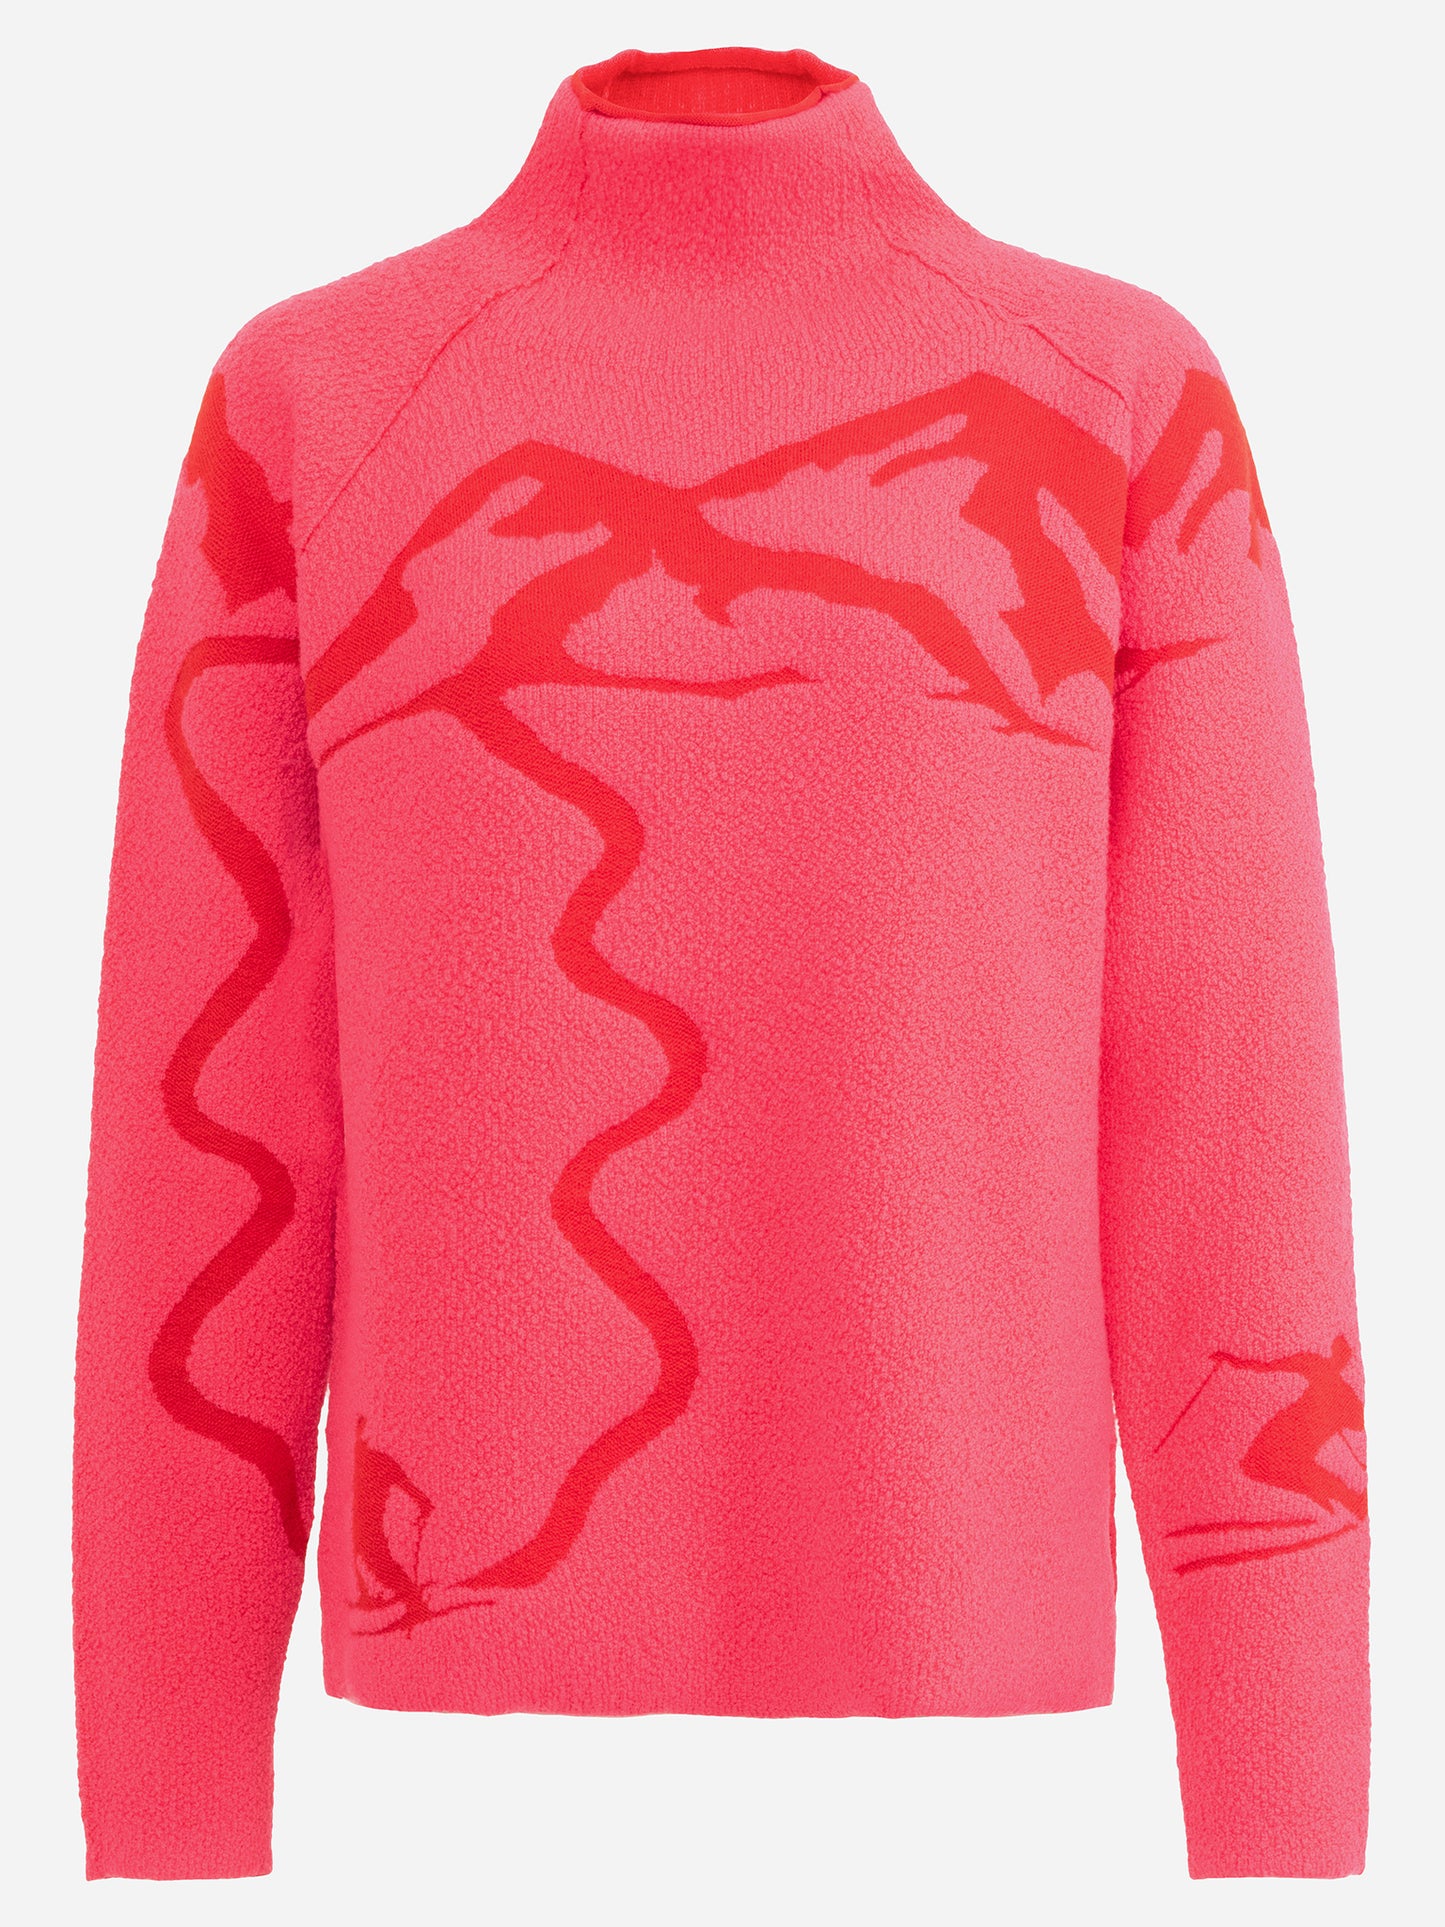 Frauenschuh Women's Chatel Sweater